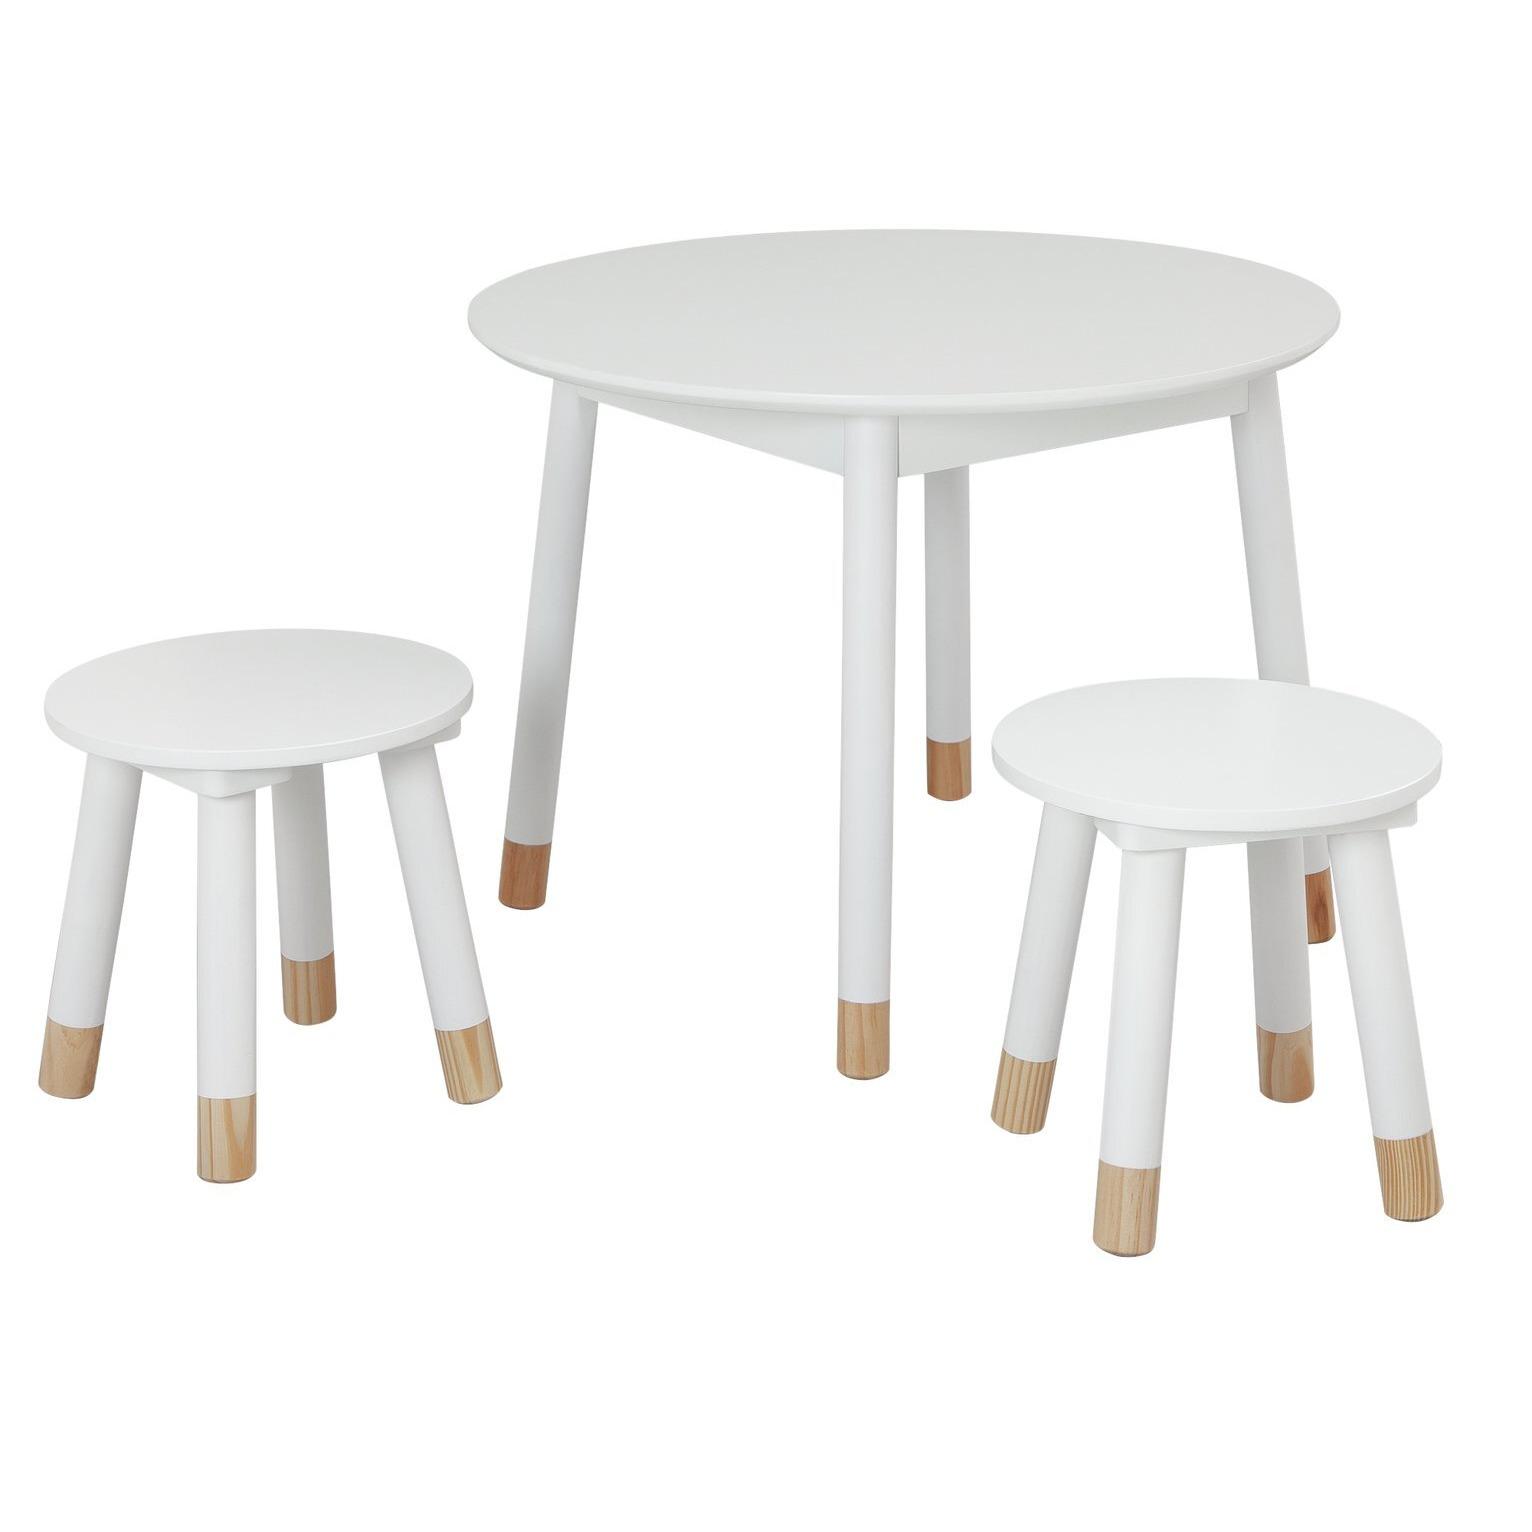 Habitat Skandi Kids Play Table & 2 Chairs - White & Acacia - image 1